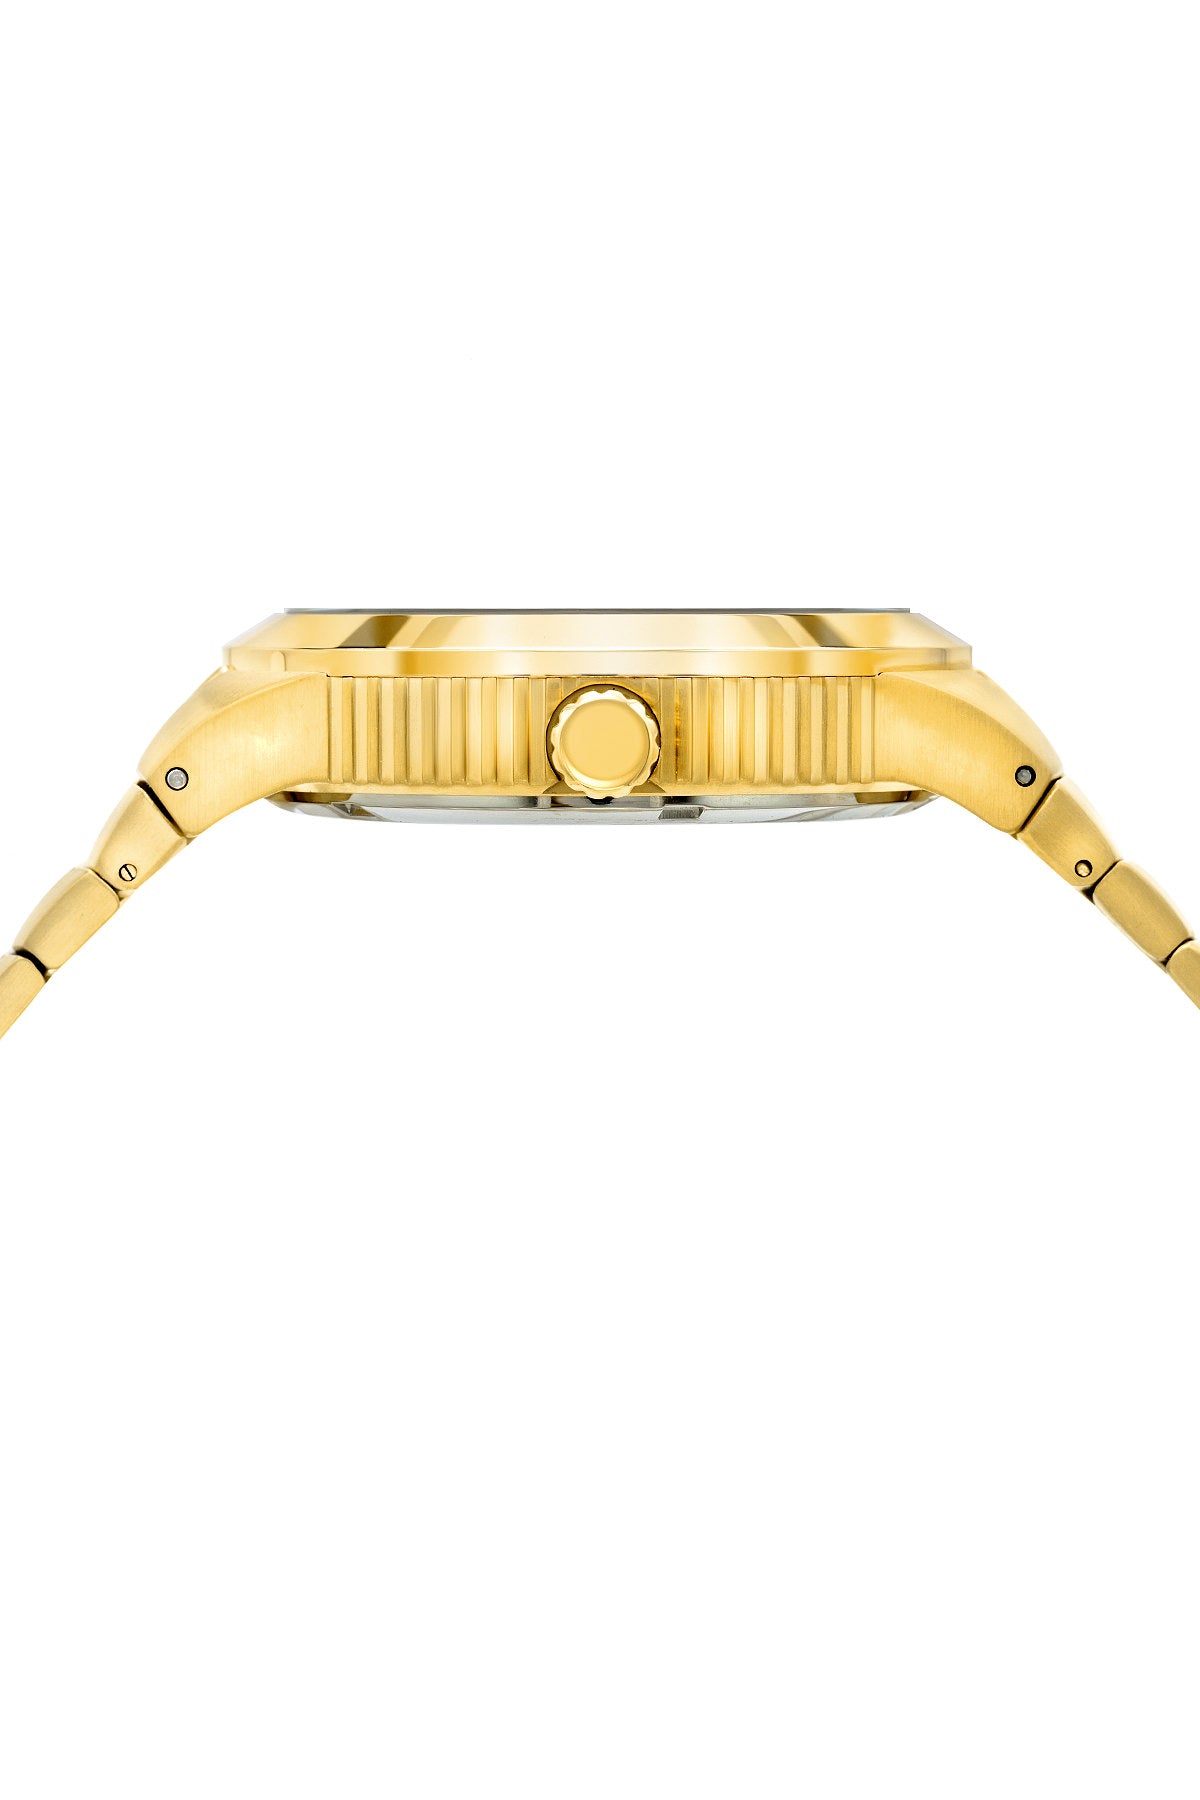 Porsamo Bleu Luca luxury men's stainless steel watch, gold, white 531BLUS